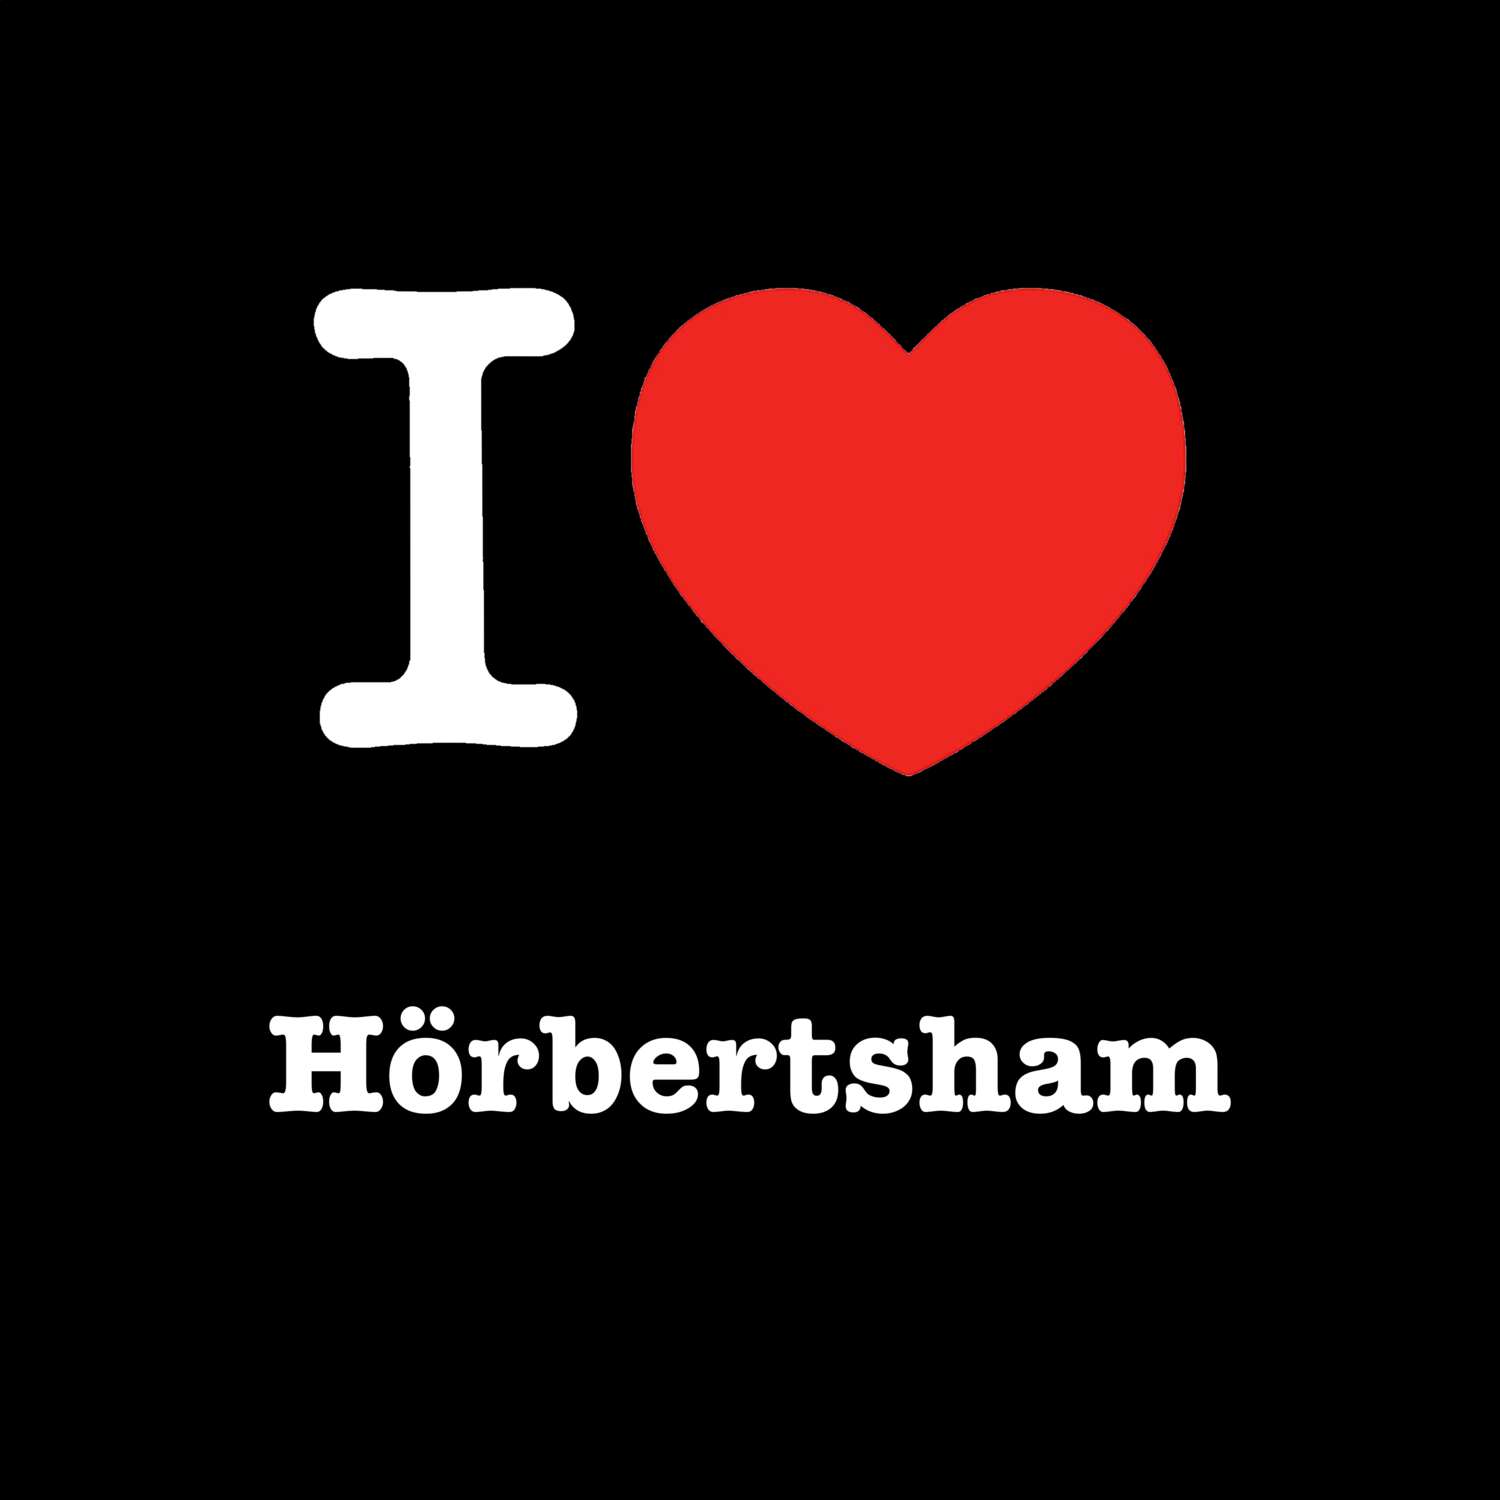 Hörbertsham T-Shirt »I love«